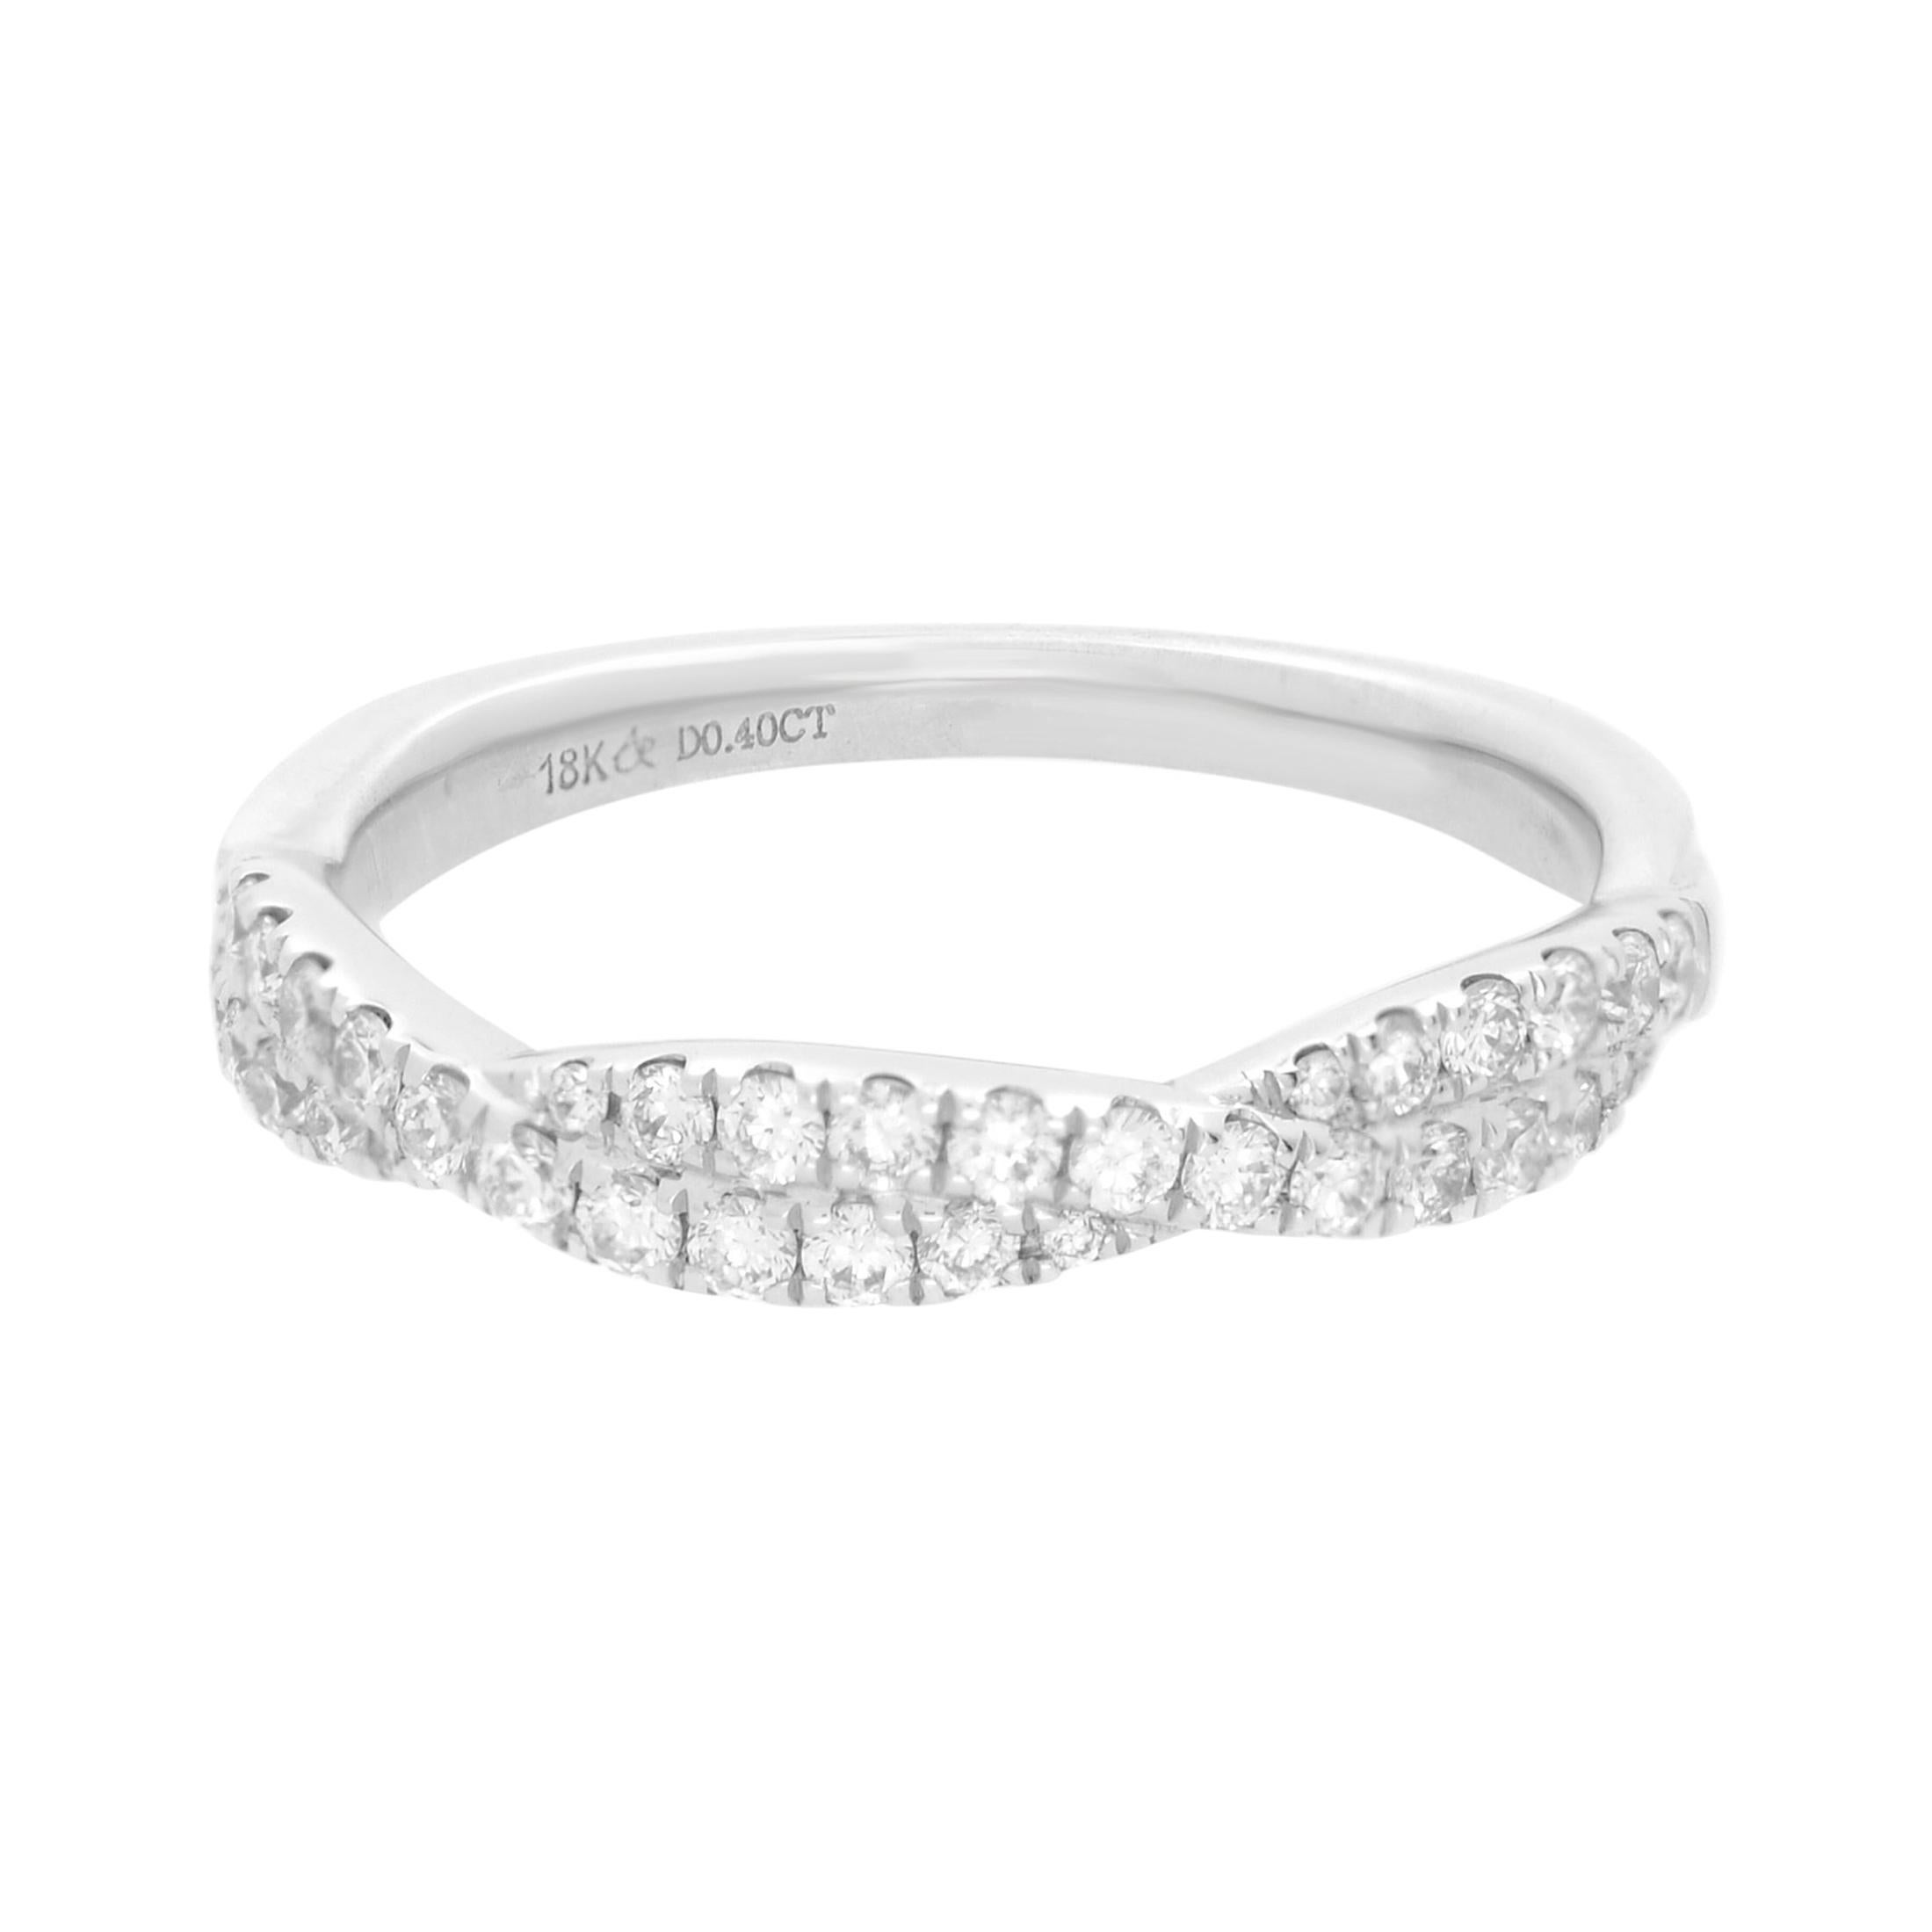 Rachel Koen Twist Diamond Wedding Band Ring 18K White Gold 0.40cttw